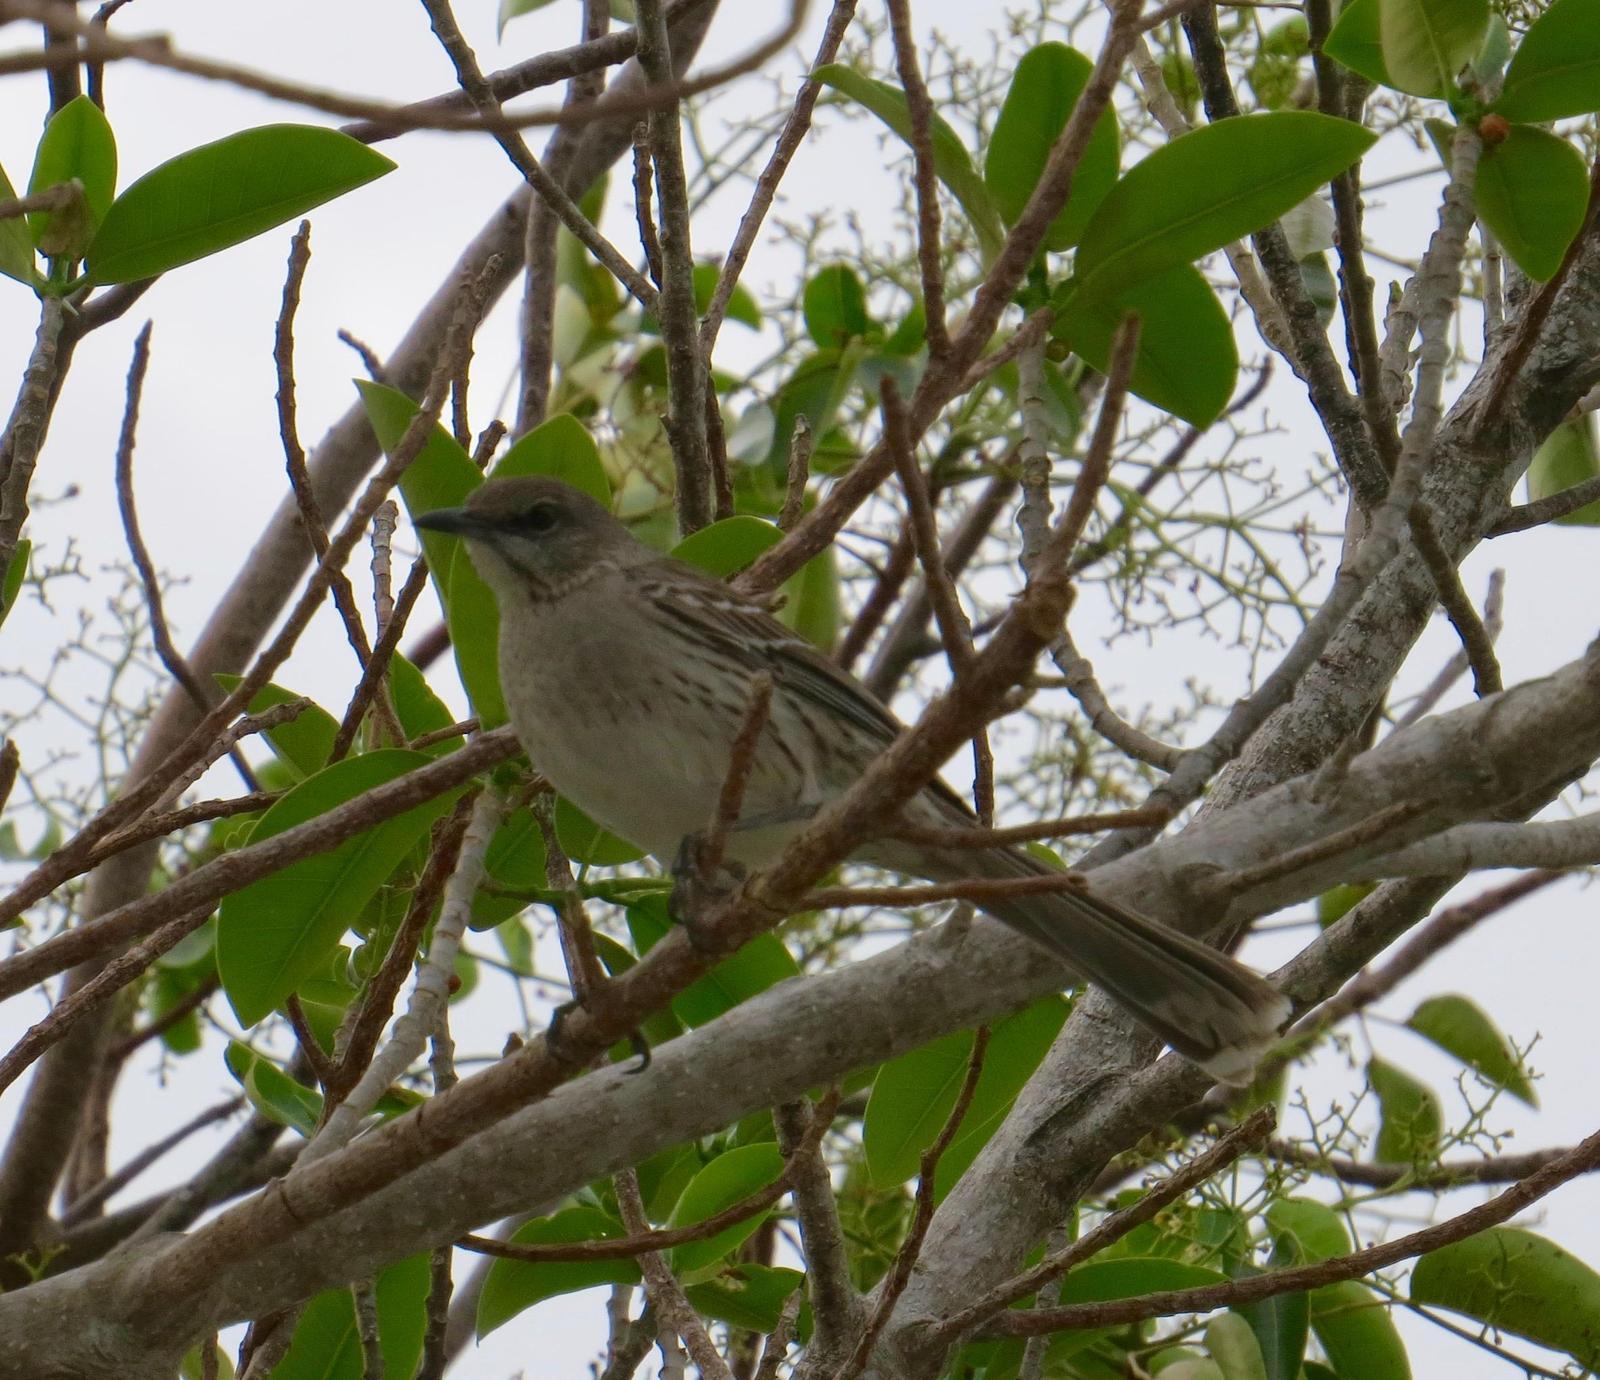 Bahama Mockingbird Photo by Don Glasco